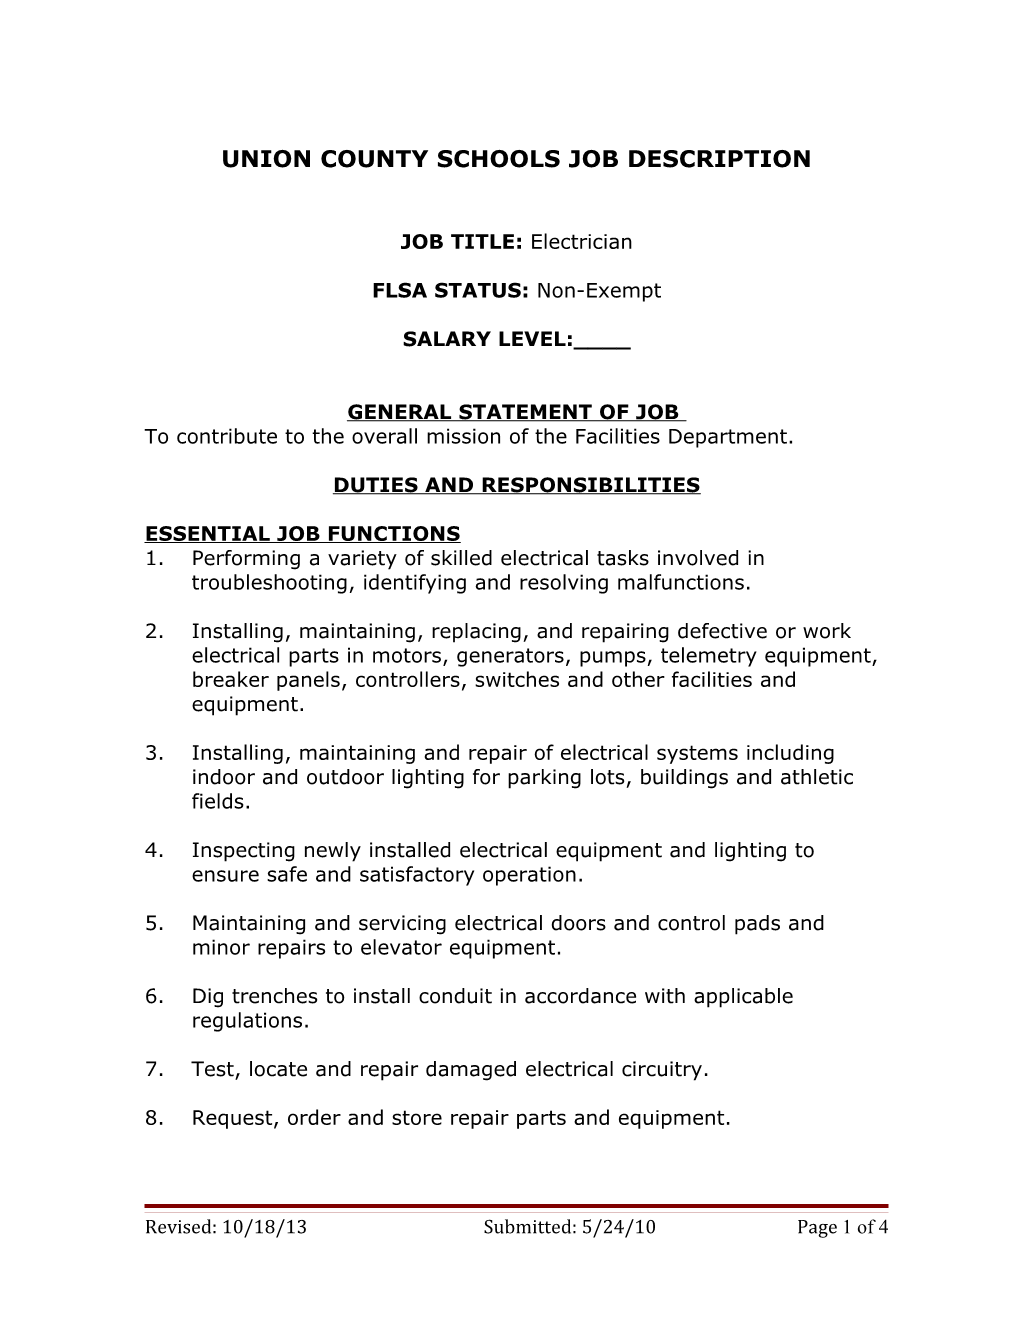 Union County Schools Job Description